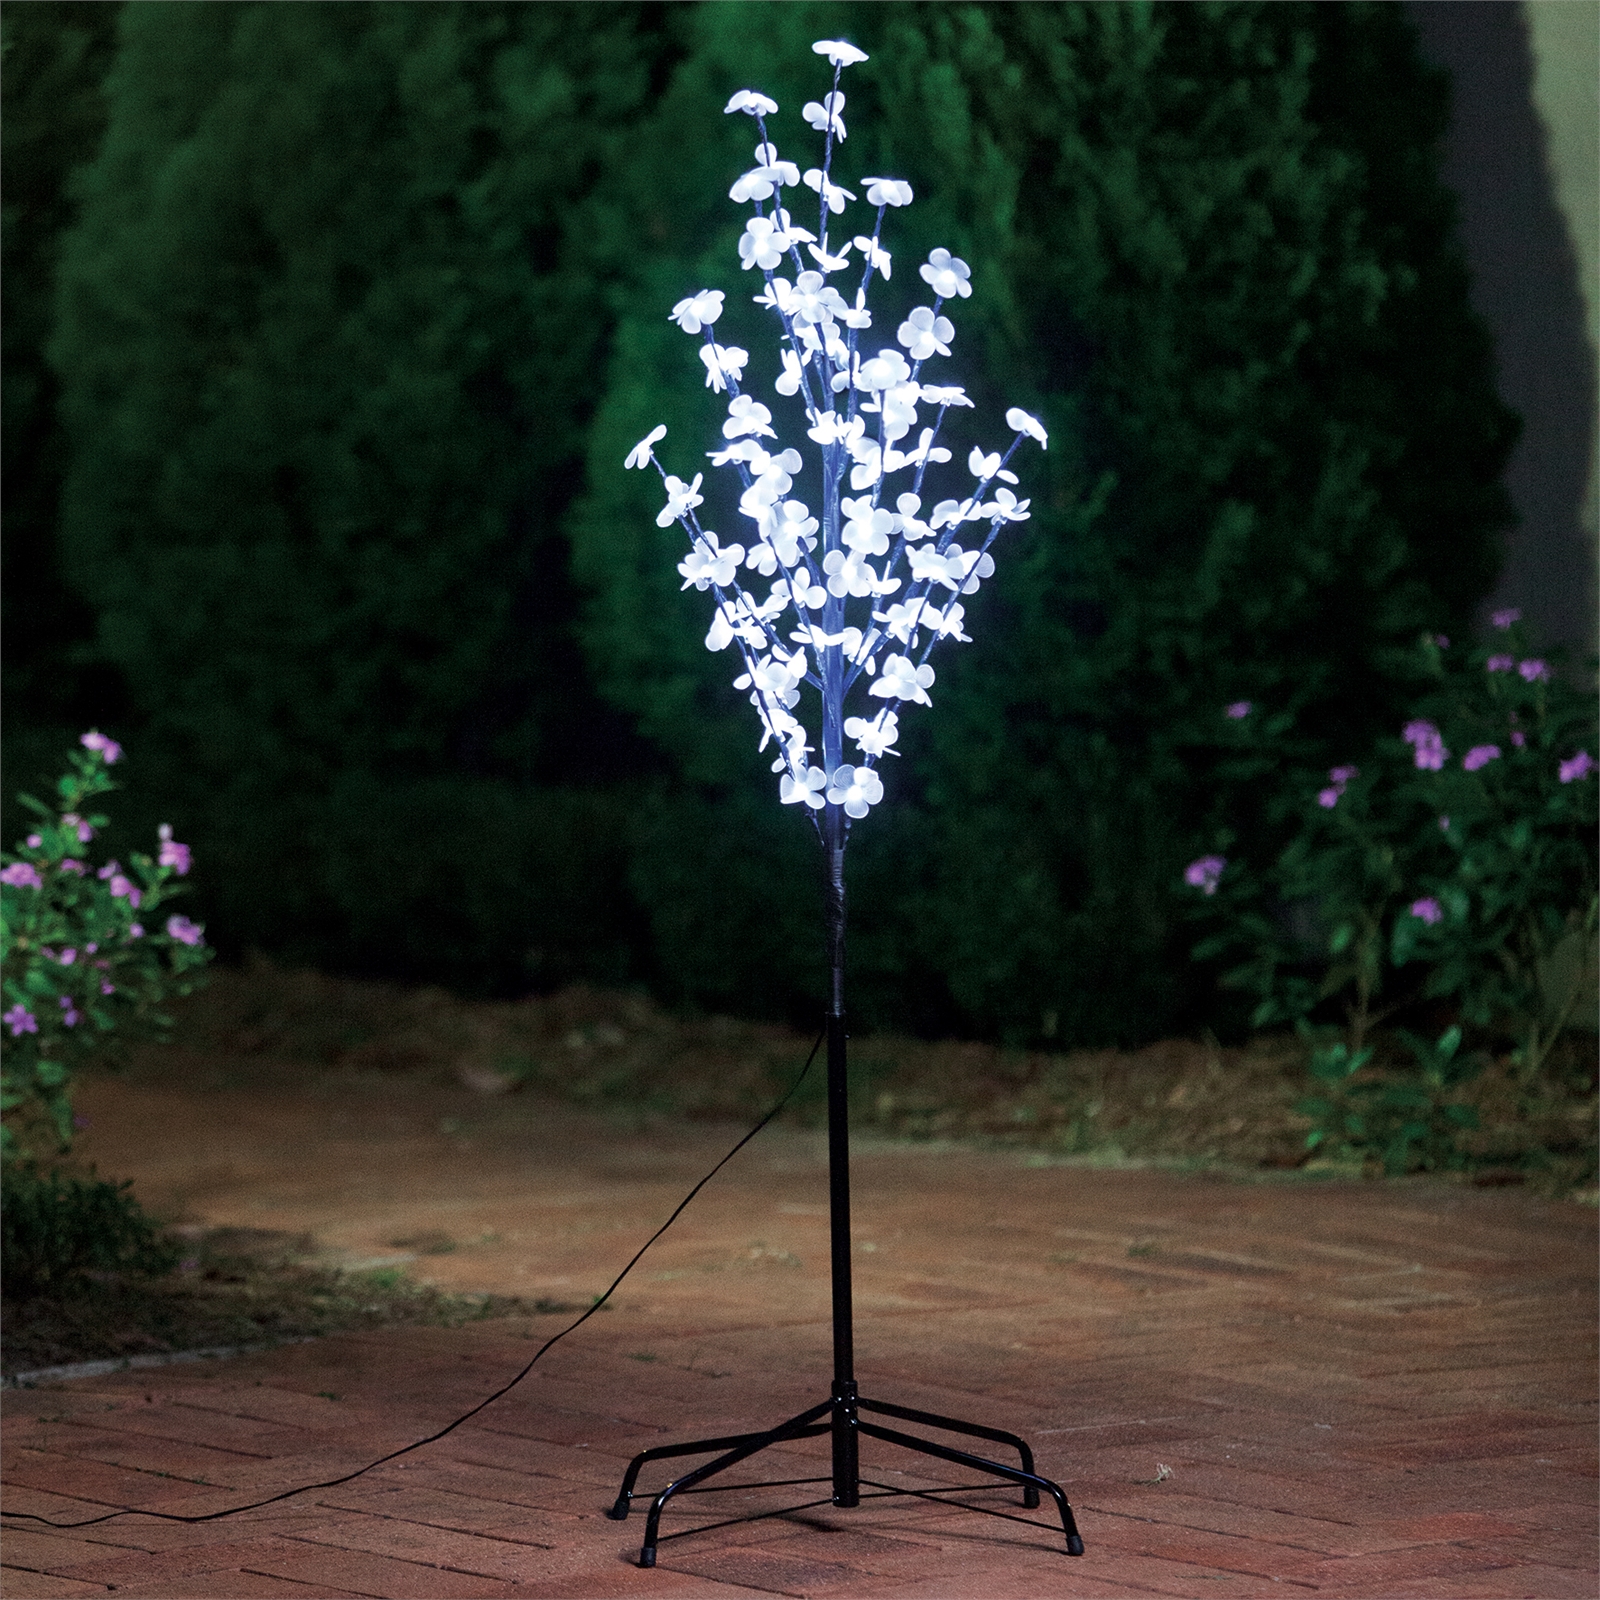 Lytworx 80 LED White Festive Lotus Tree Light